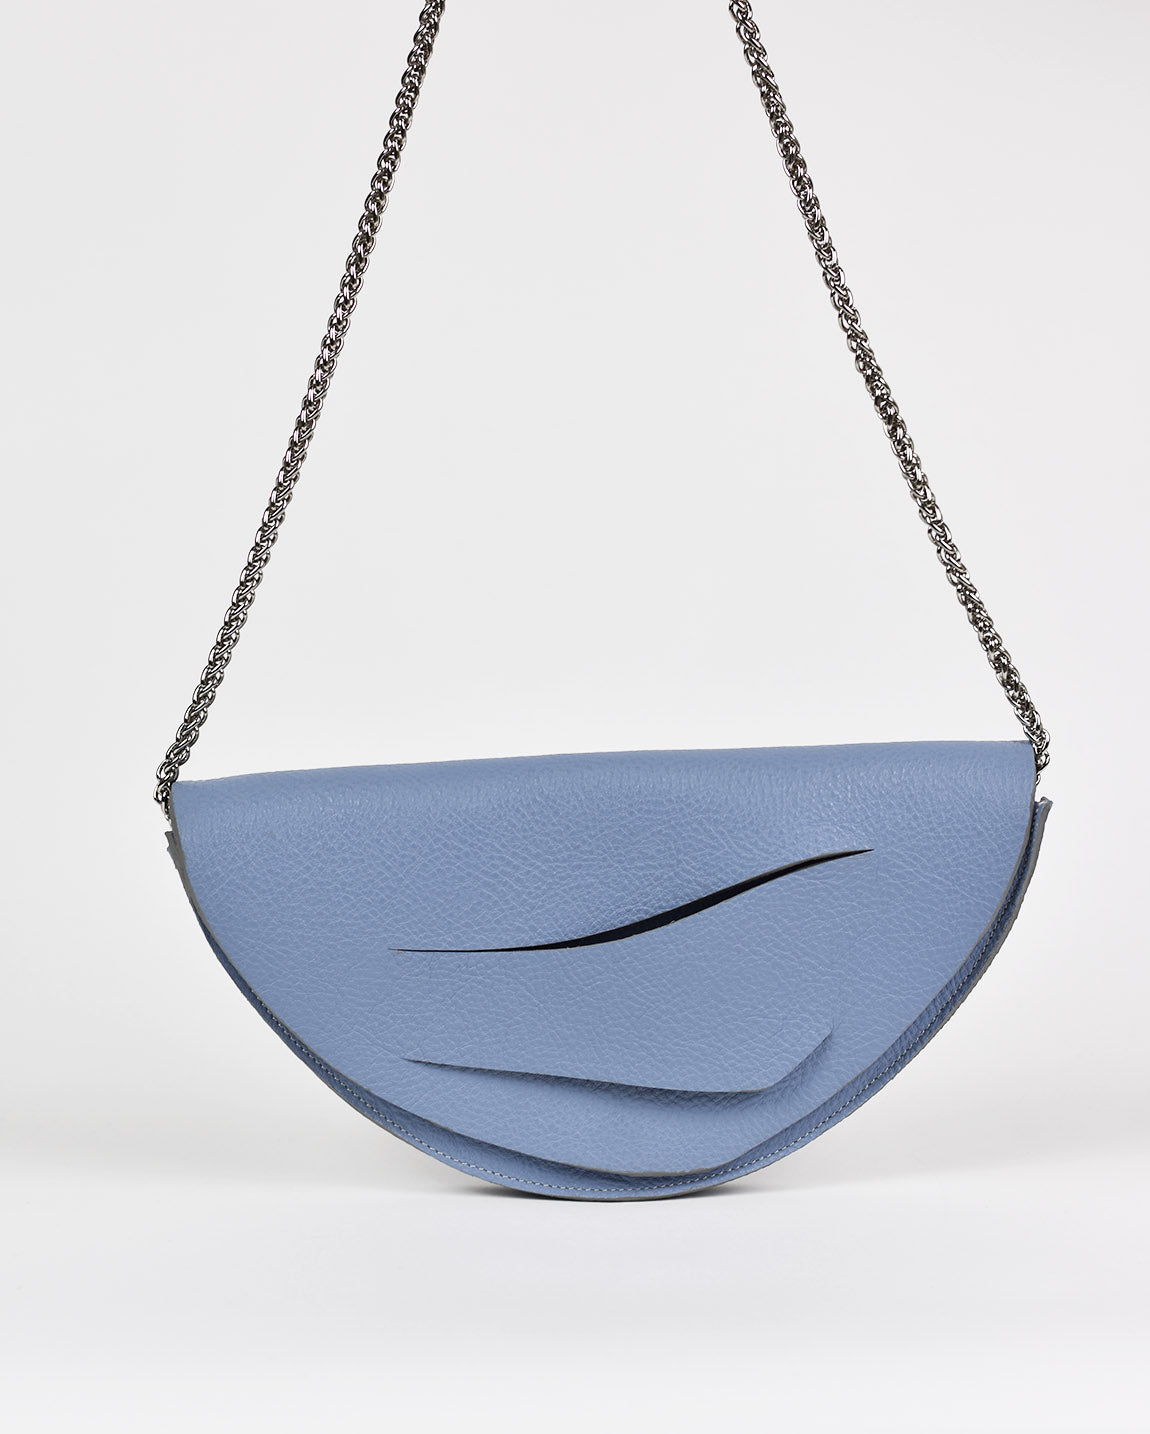 Dune Chain Bag - Cornflower Blue - Mini / Standard